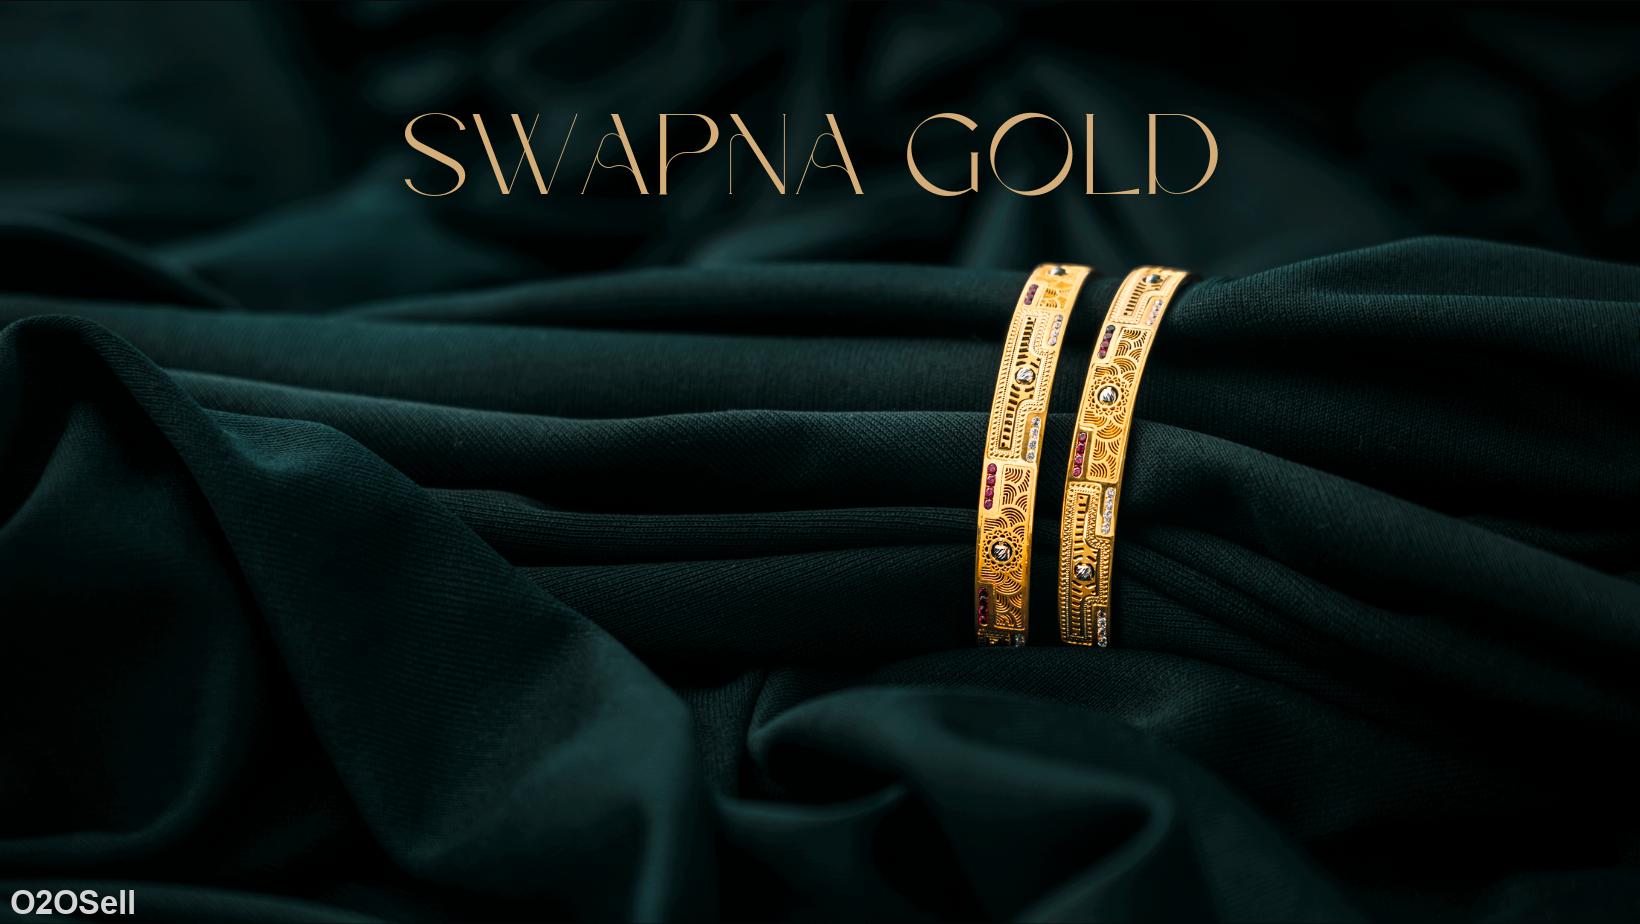 panaya swarnam and swarna panayam - Swapna gold - Cover Image